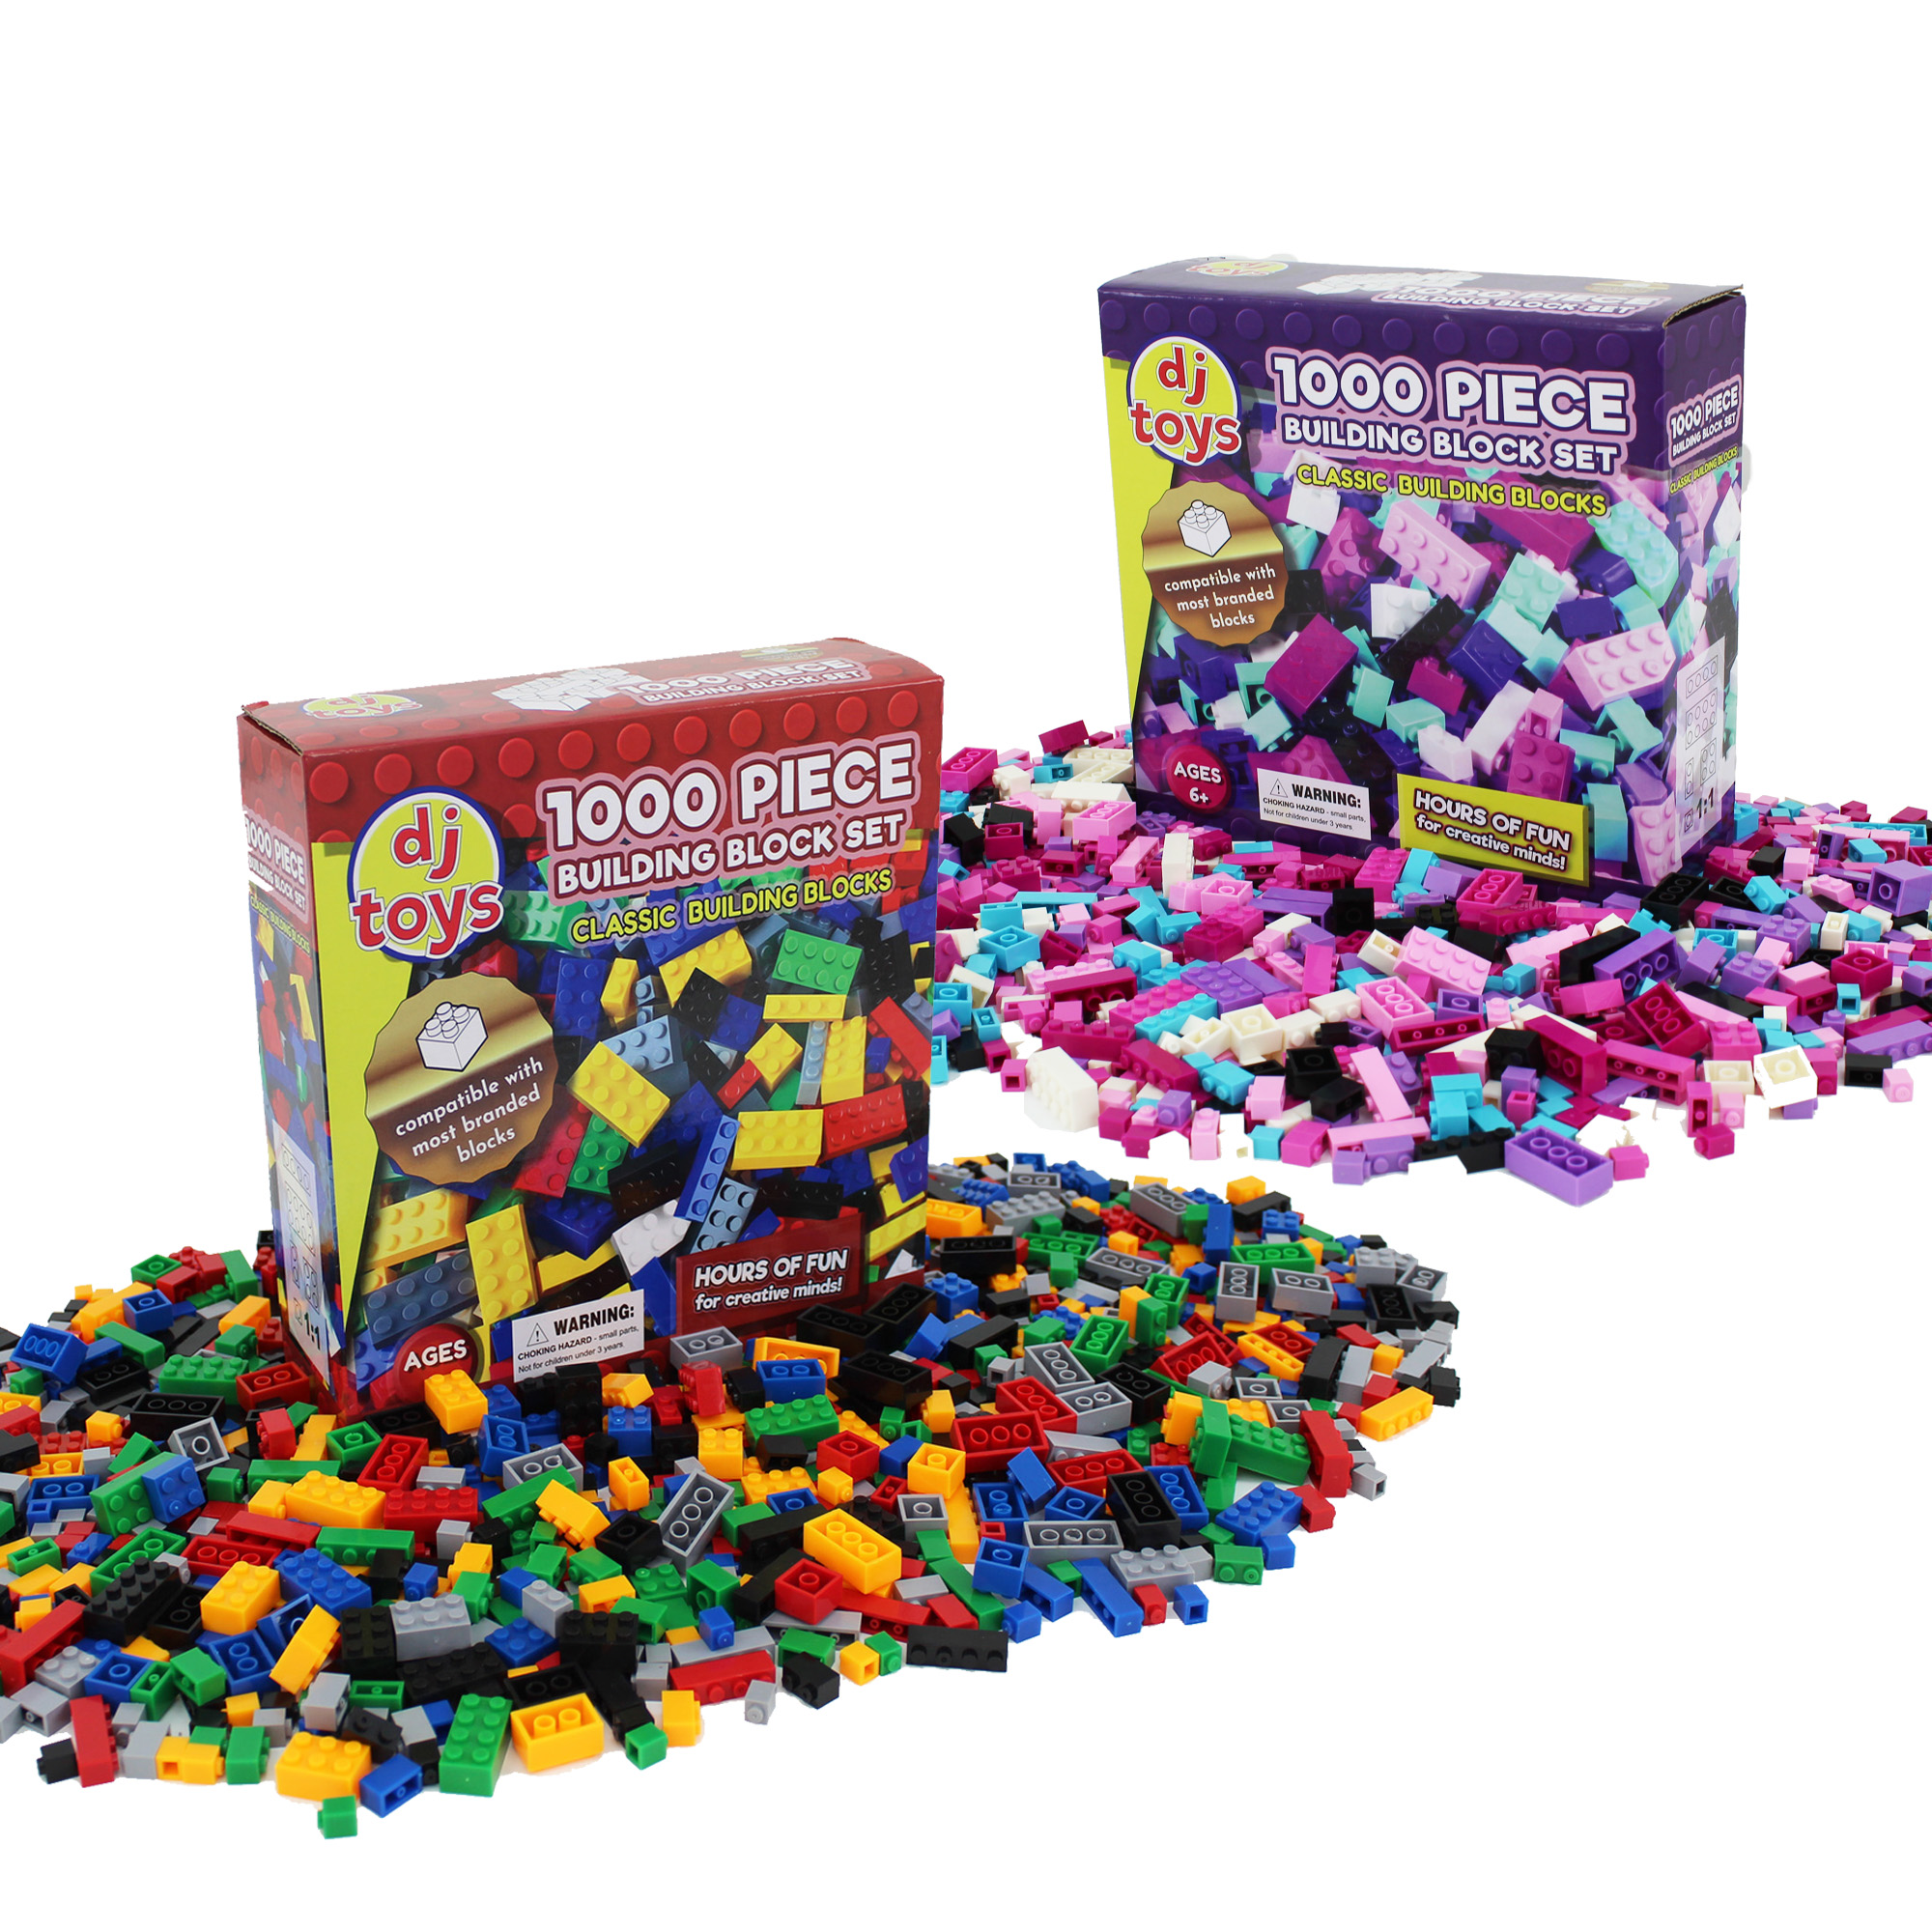 1000 piece lego set